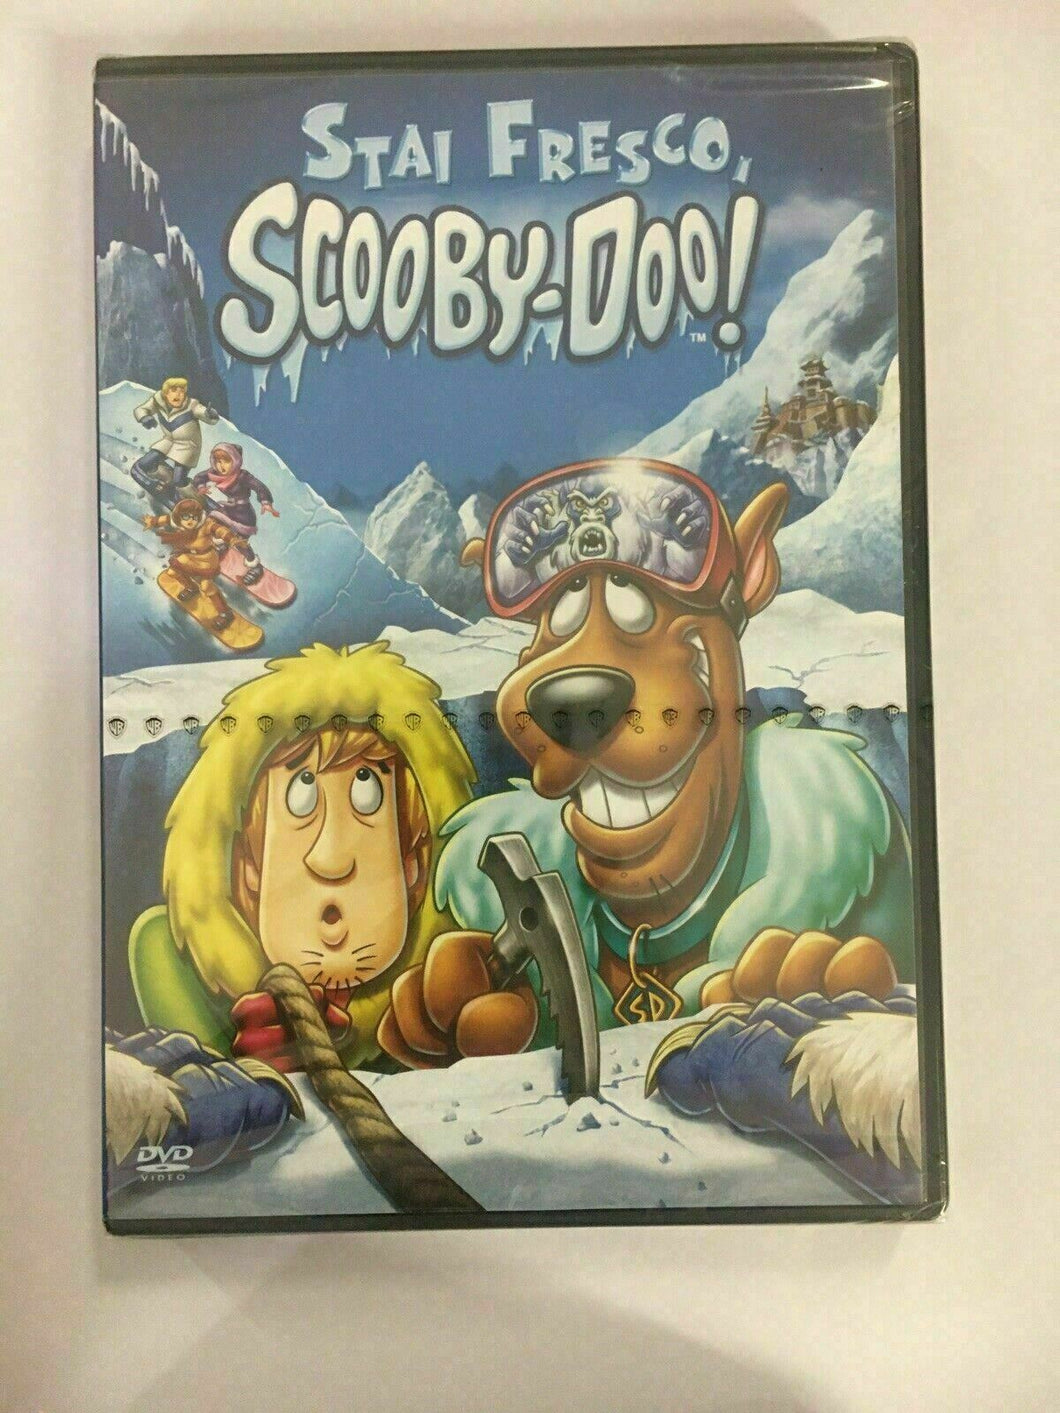 Stai fresco, Scooby-Doo! (2007) DVD